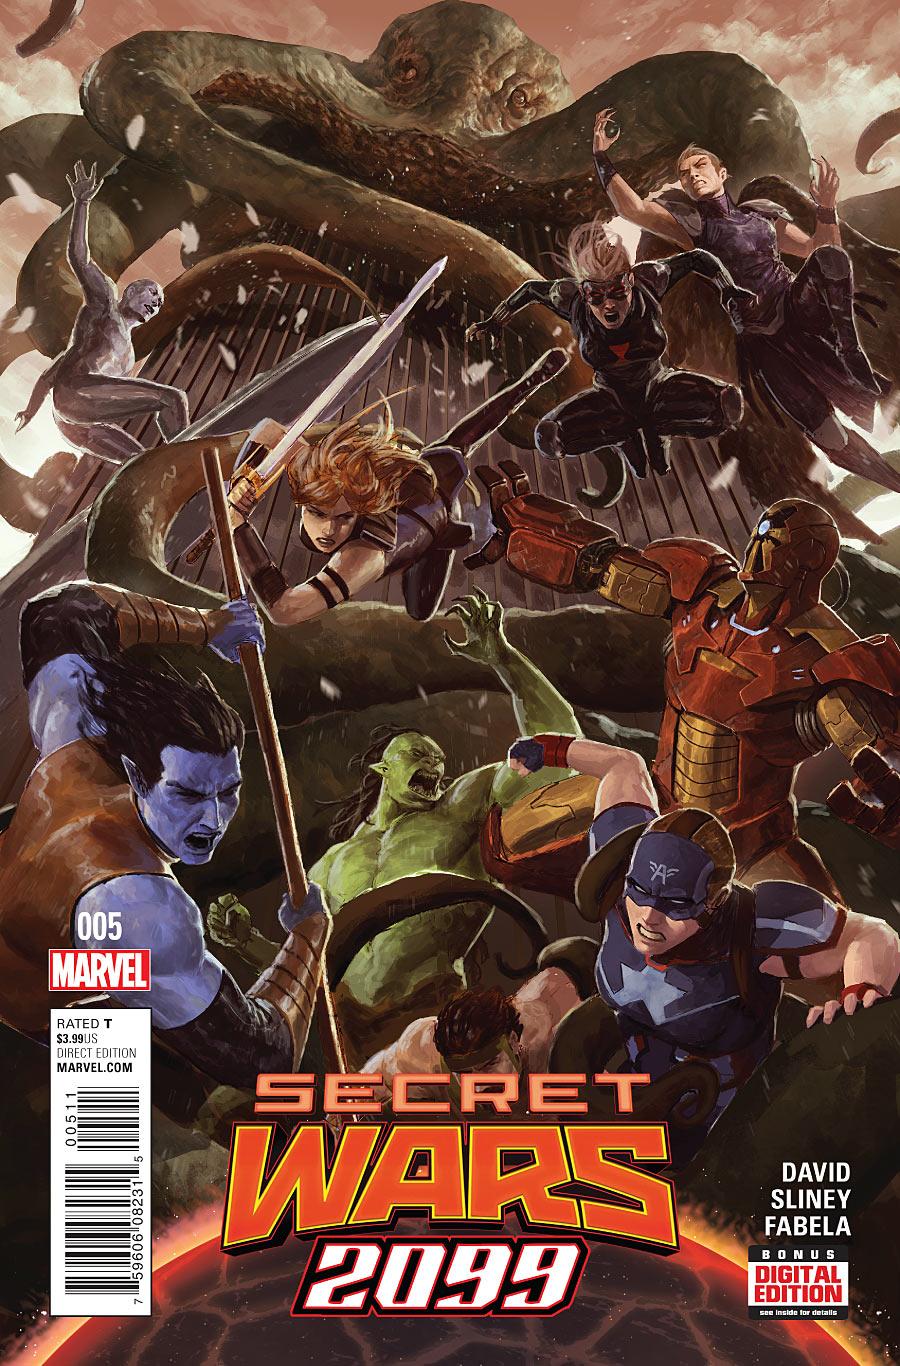 Secret Wars 2099 Vol. 1 #5